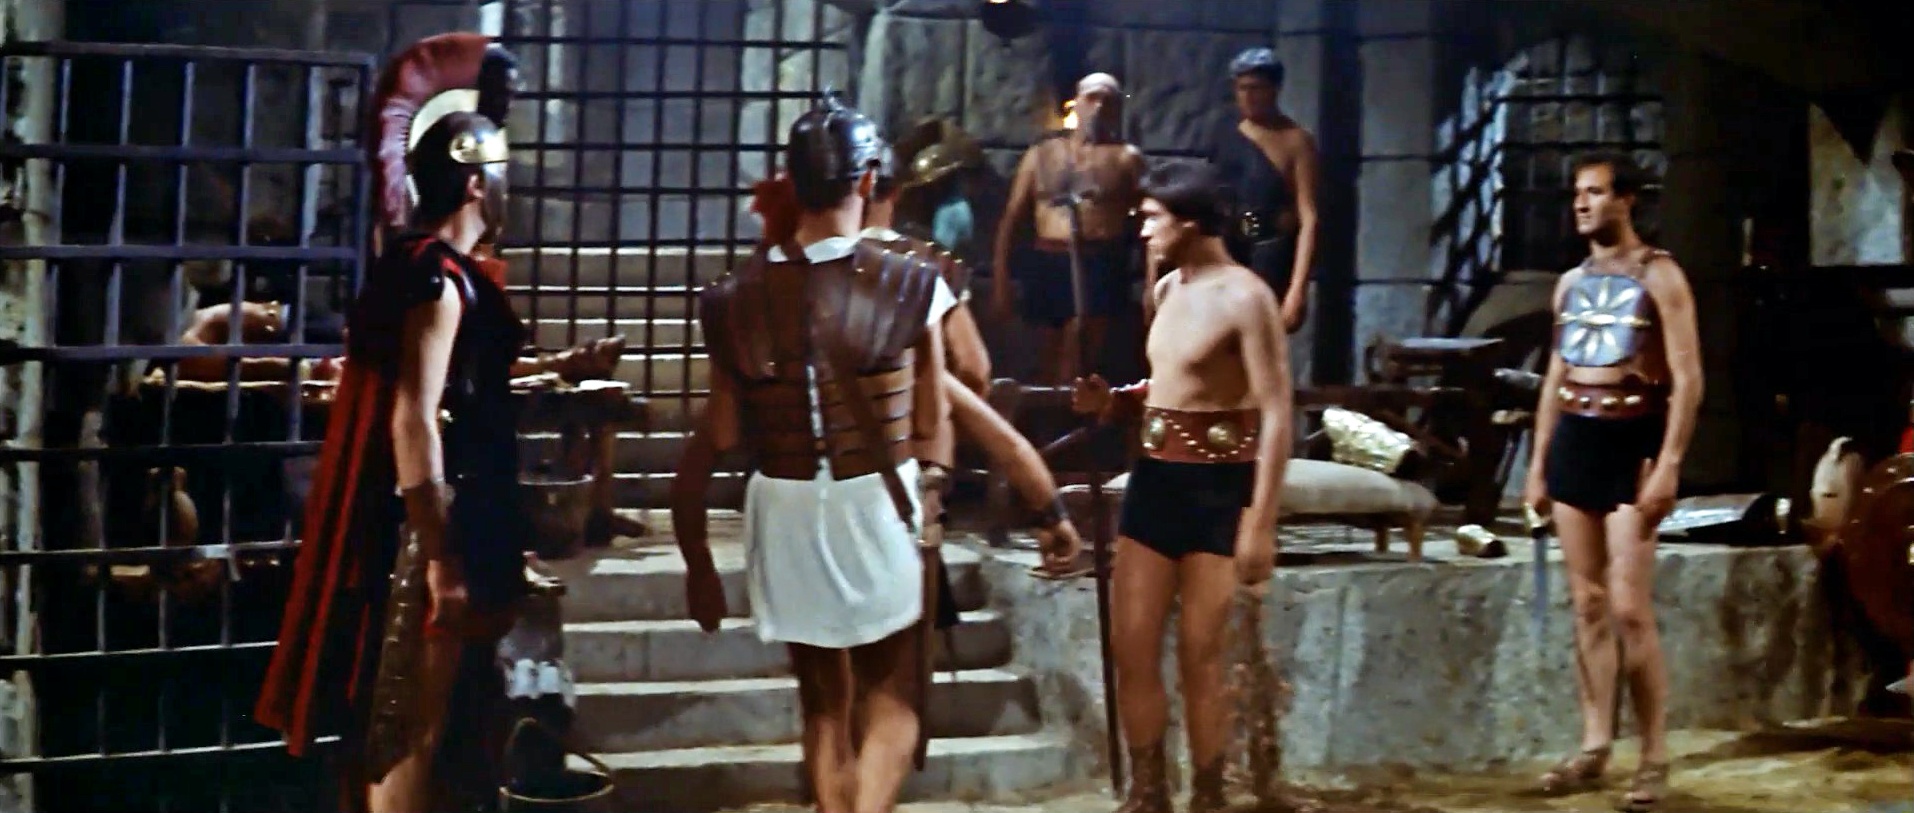 Los siete espartanos aka I sette gladiatori (HD)17.jpg